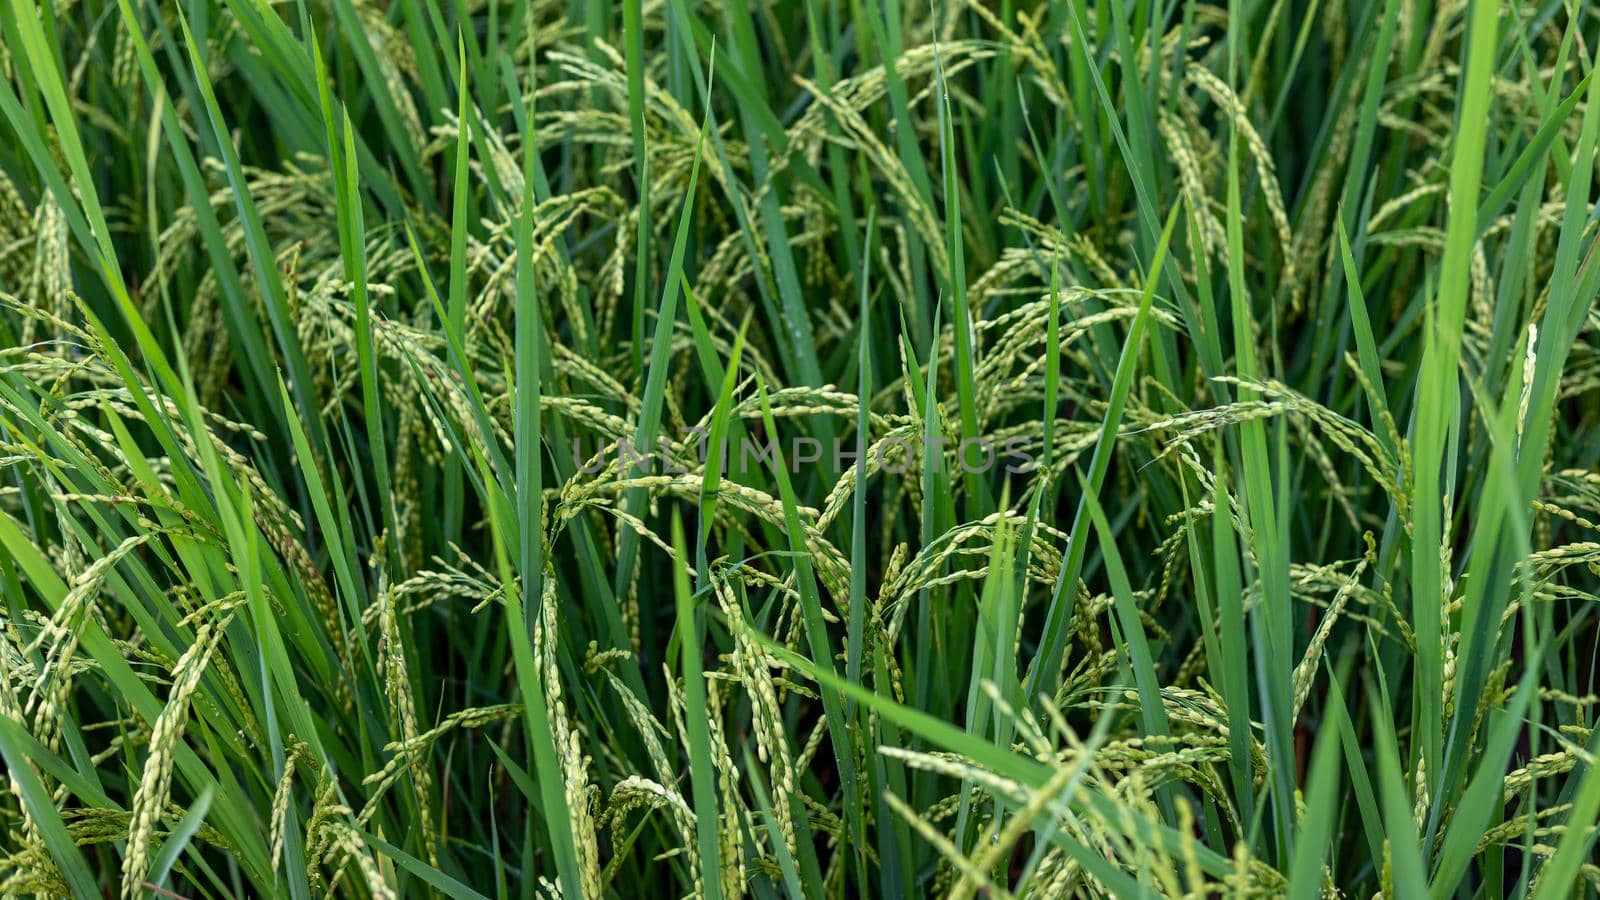 Green rice crop in the fields closeup view by Bilalphotos